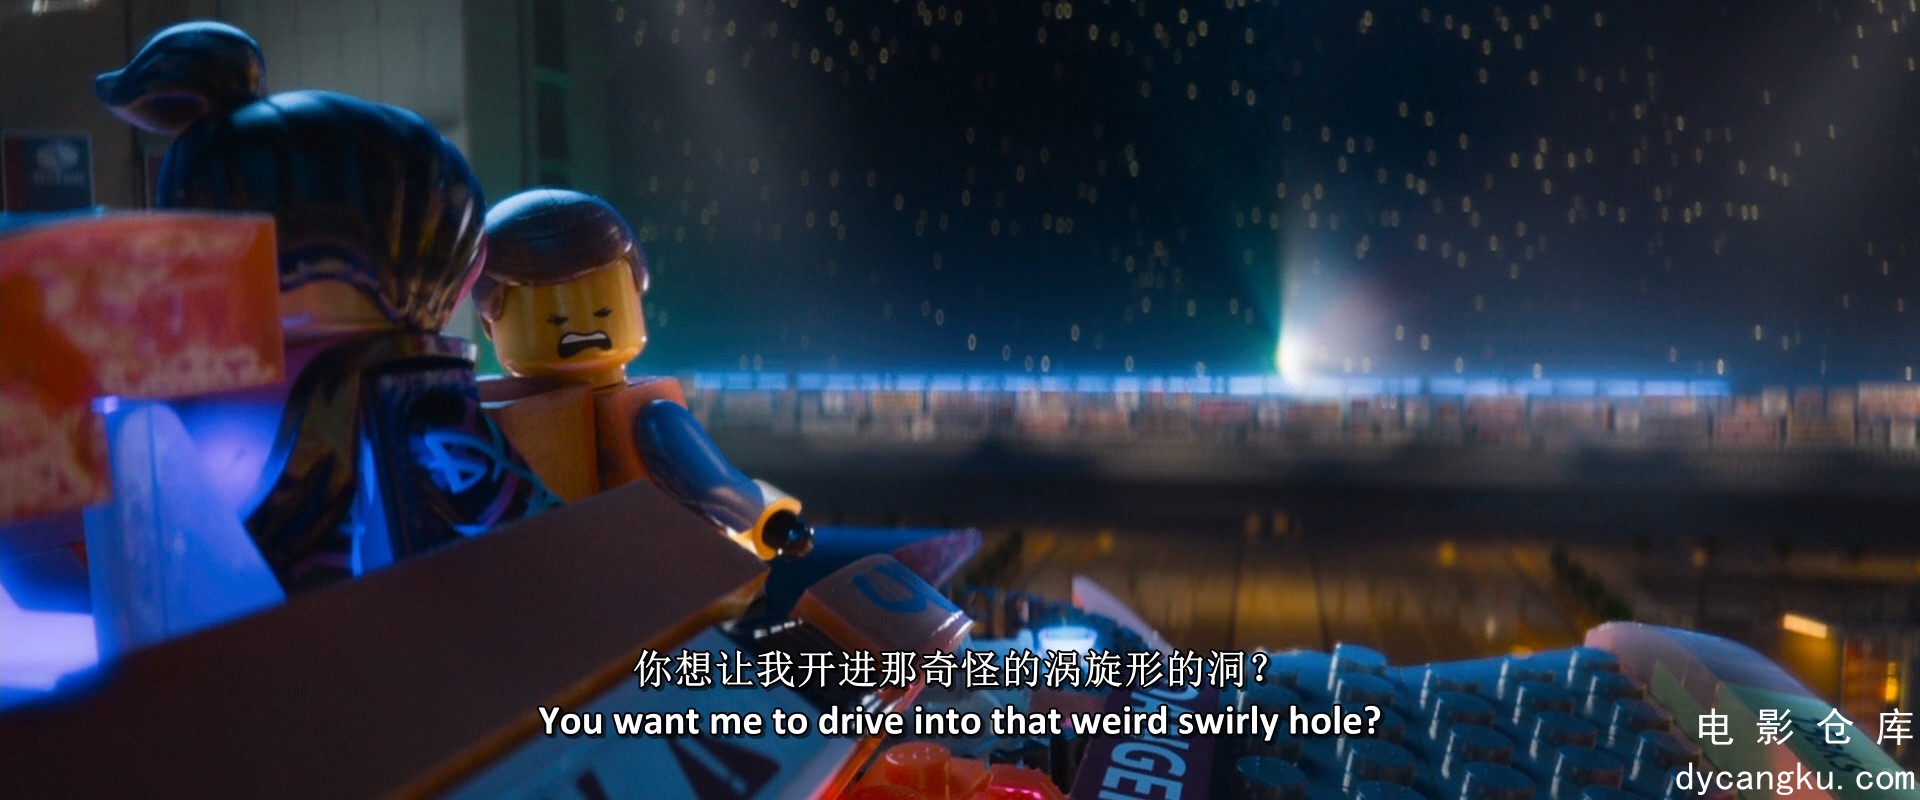 [电影仓库dycangku.com]The.Lego.Movie.2014.1080p.BluRay.x264.DTS.mkv_snapshot_00..jpg